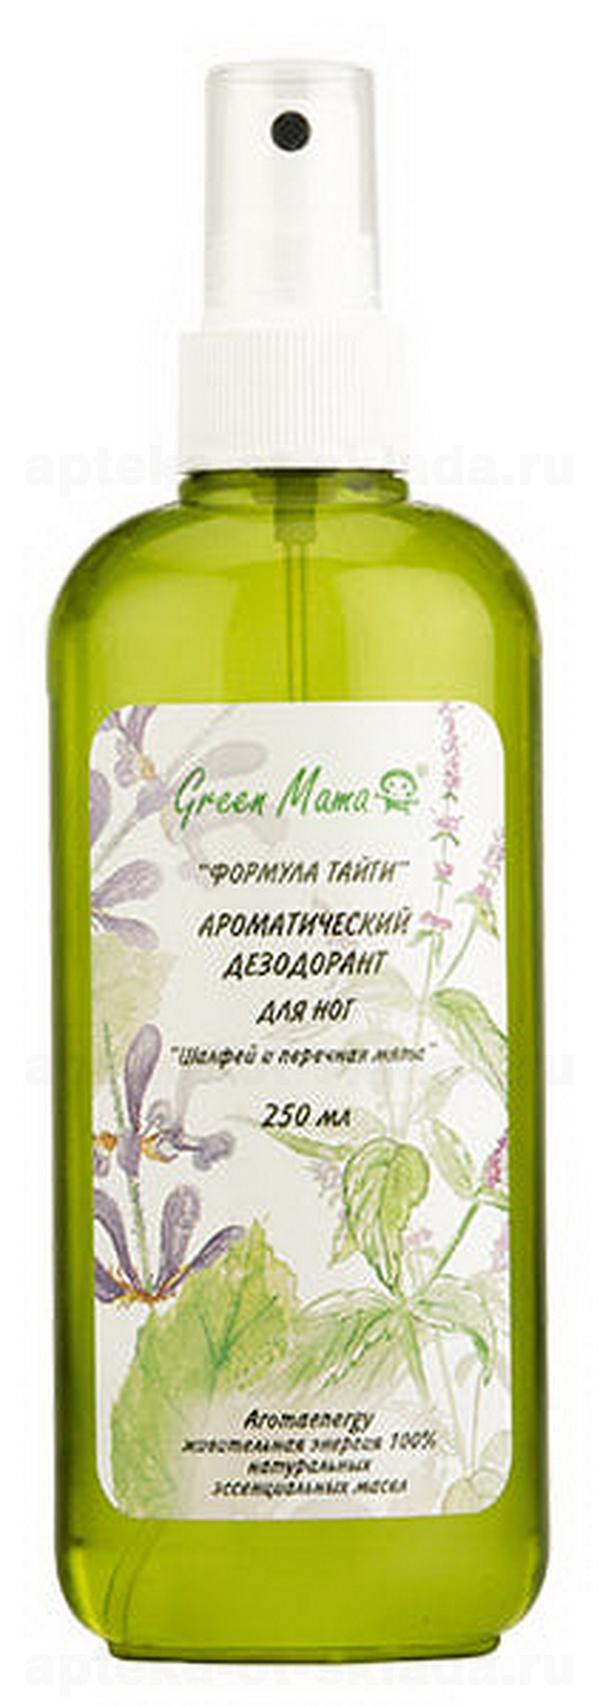 Green Mama ароматический дезодорант для ног мята/шалфей 250 мл